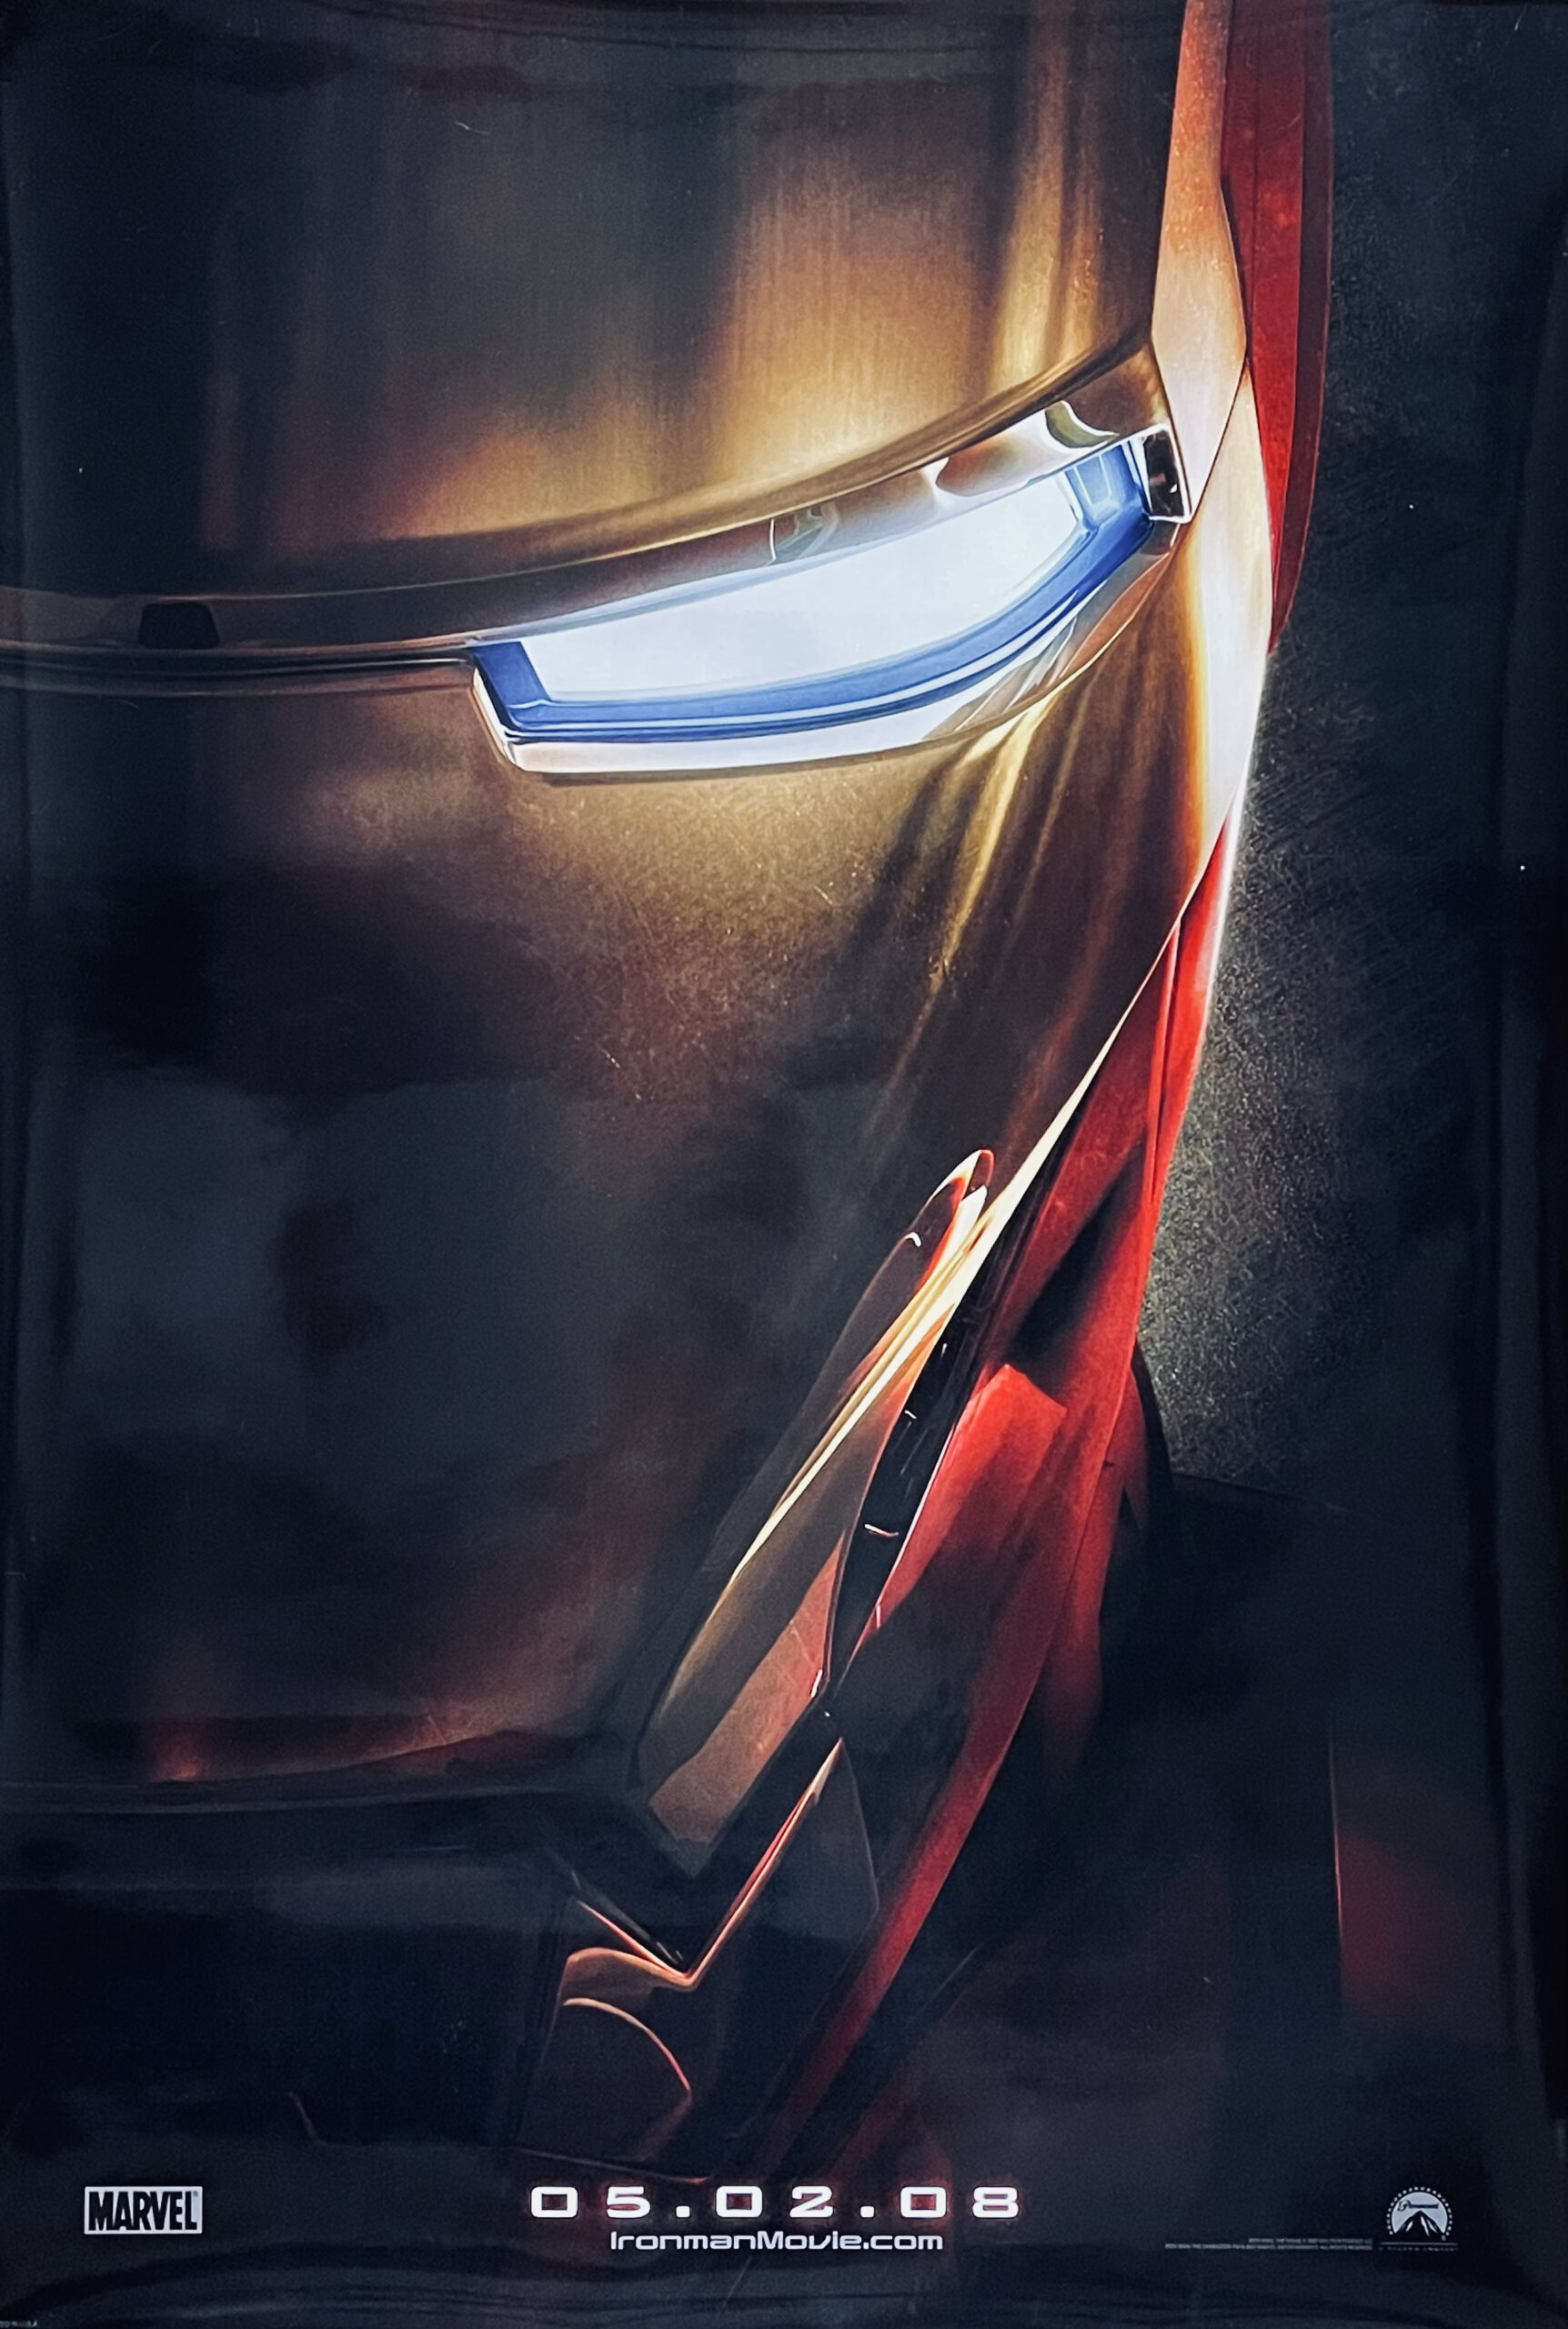 Original Iron Man Movie Poster - Marvel - Robert Downey Jr.